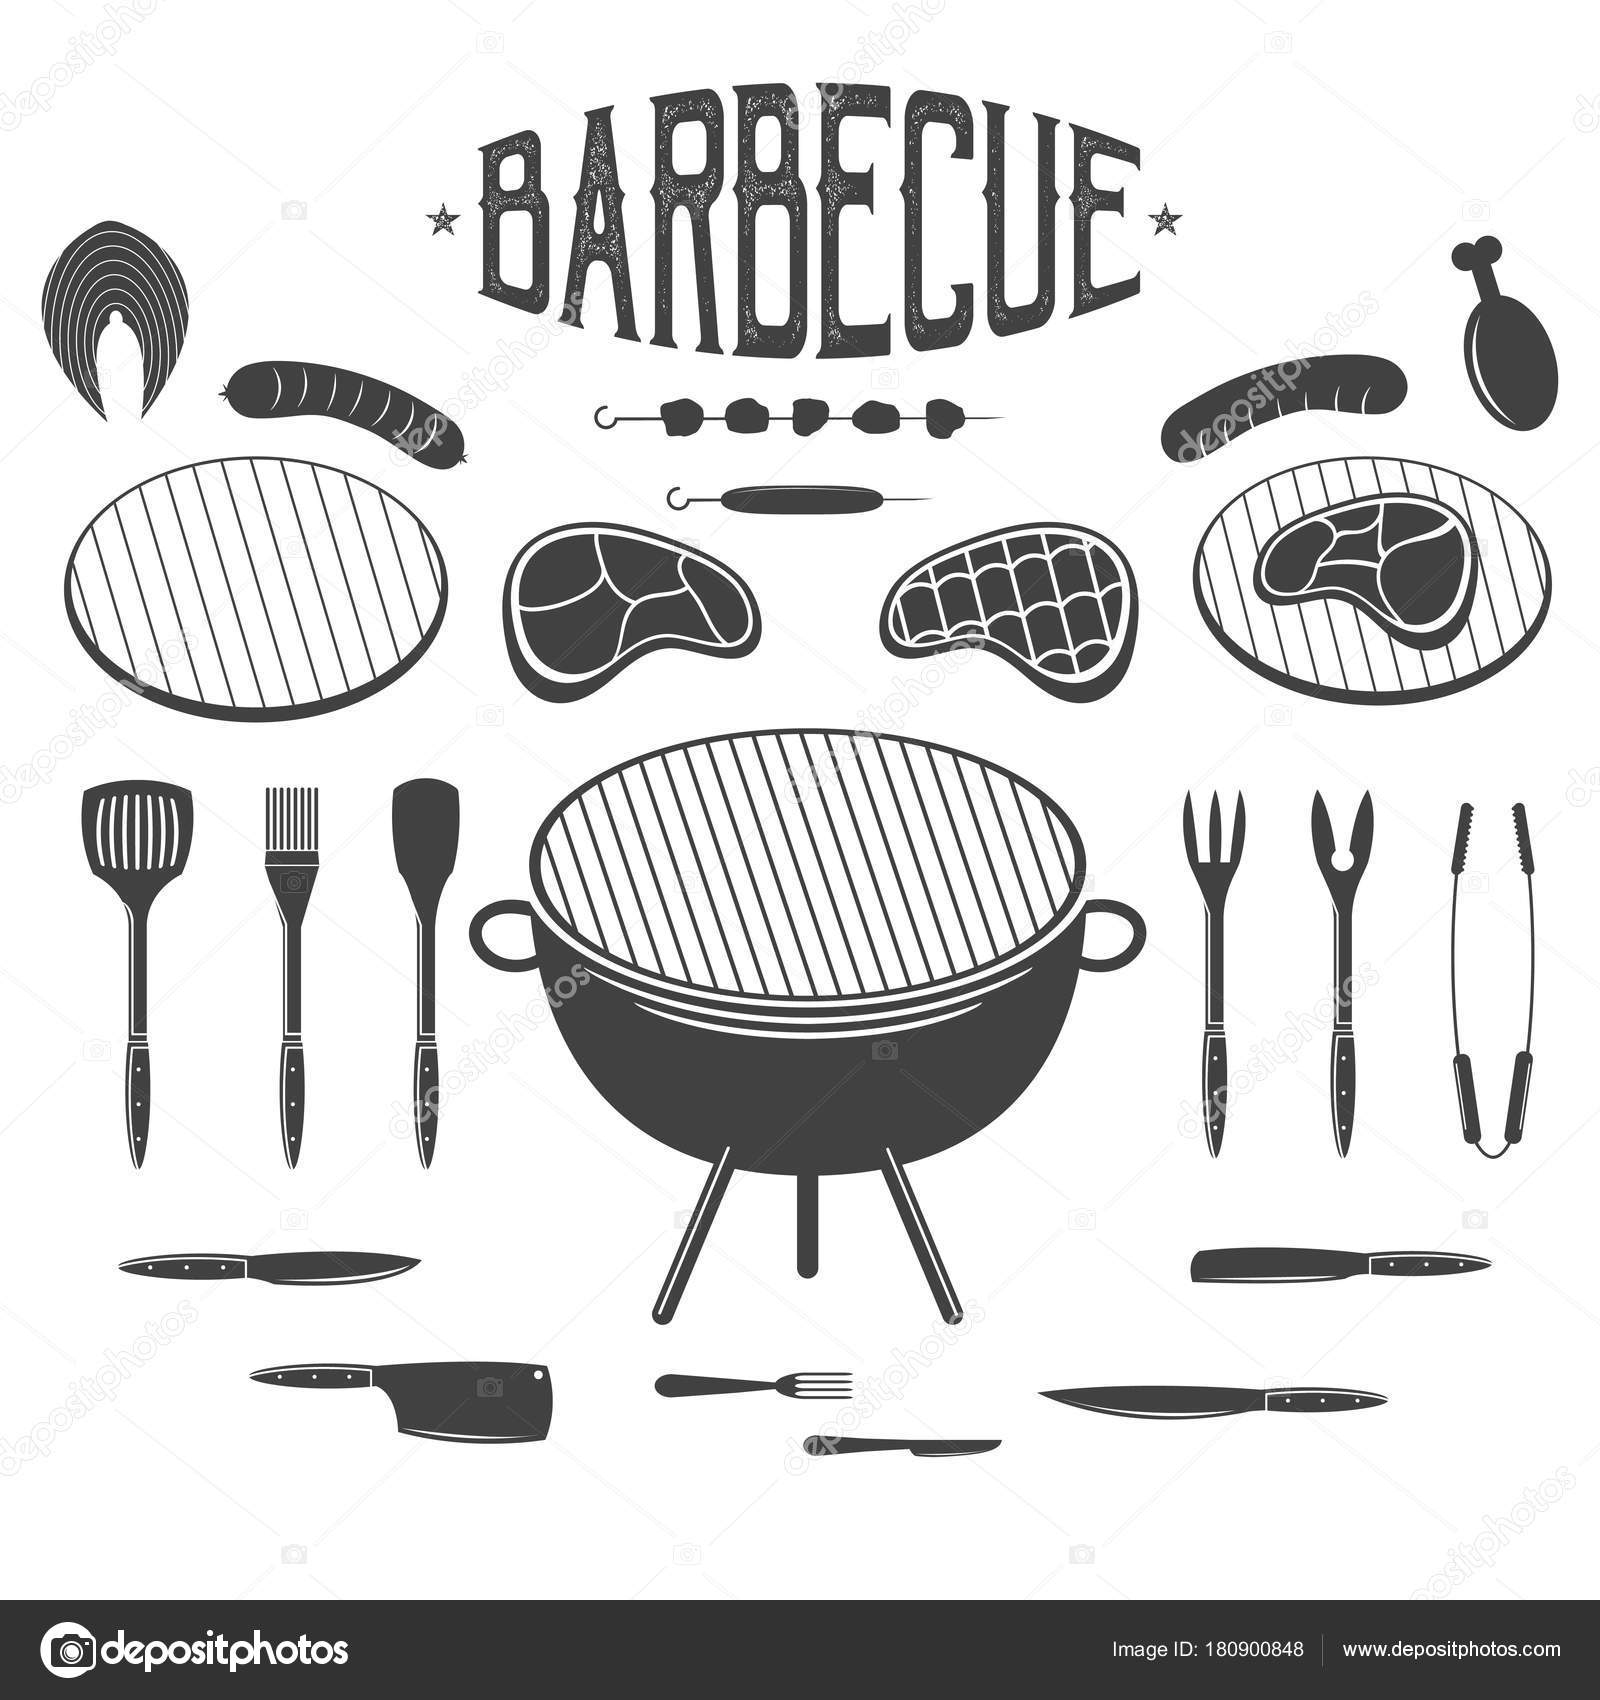 https://st3.depositphotos.com/13905956/18090/v/1600/depositphotos_180900848-stock-illustration-bbq-barbecue-and-grill-design.jpg